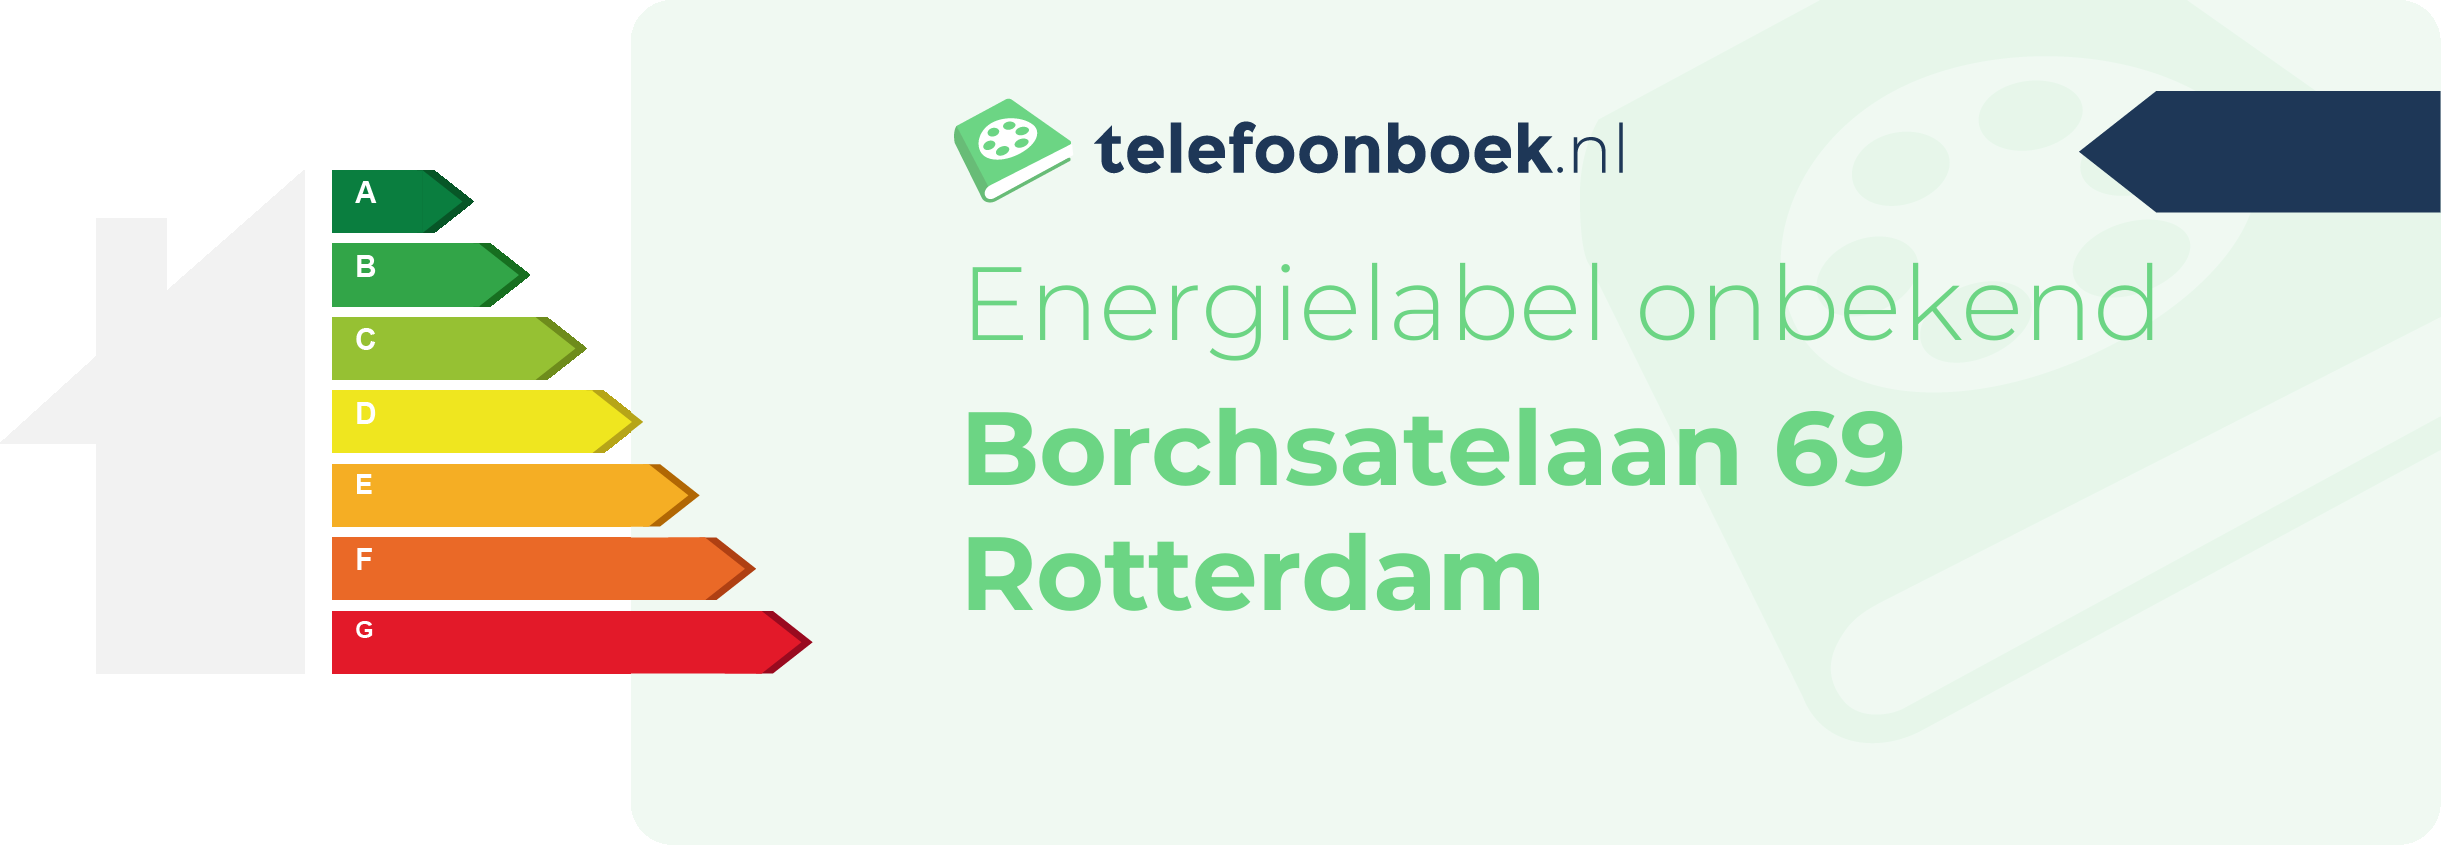 Energielabel Borchsatelaan 69 Rotterdam